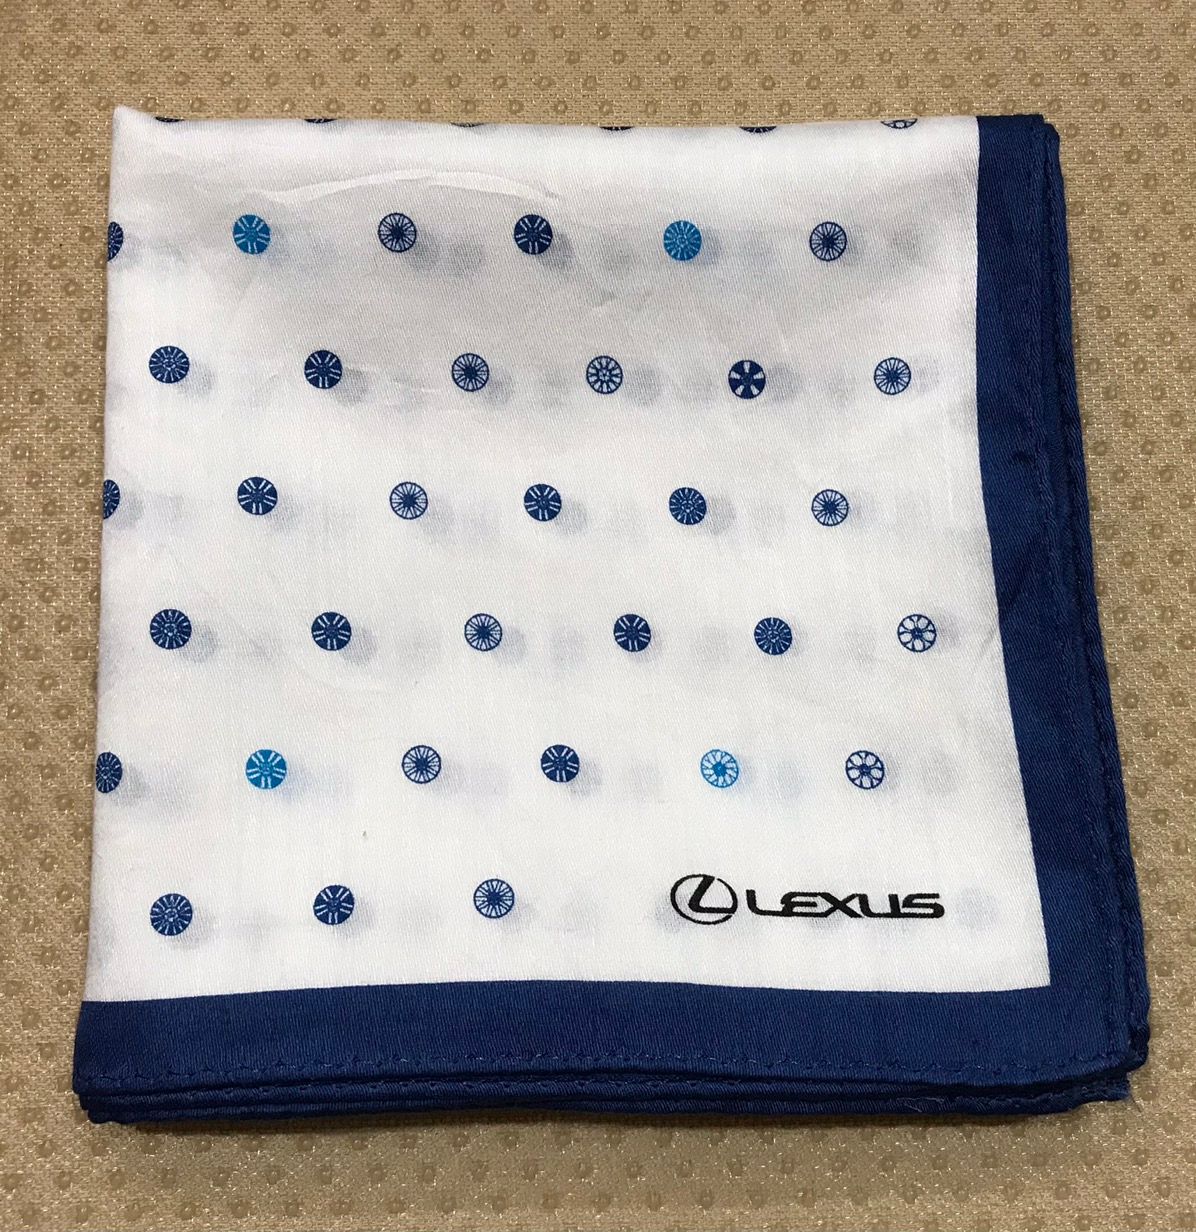 Racing - lexus bandana handkerchief - 1